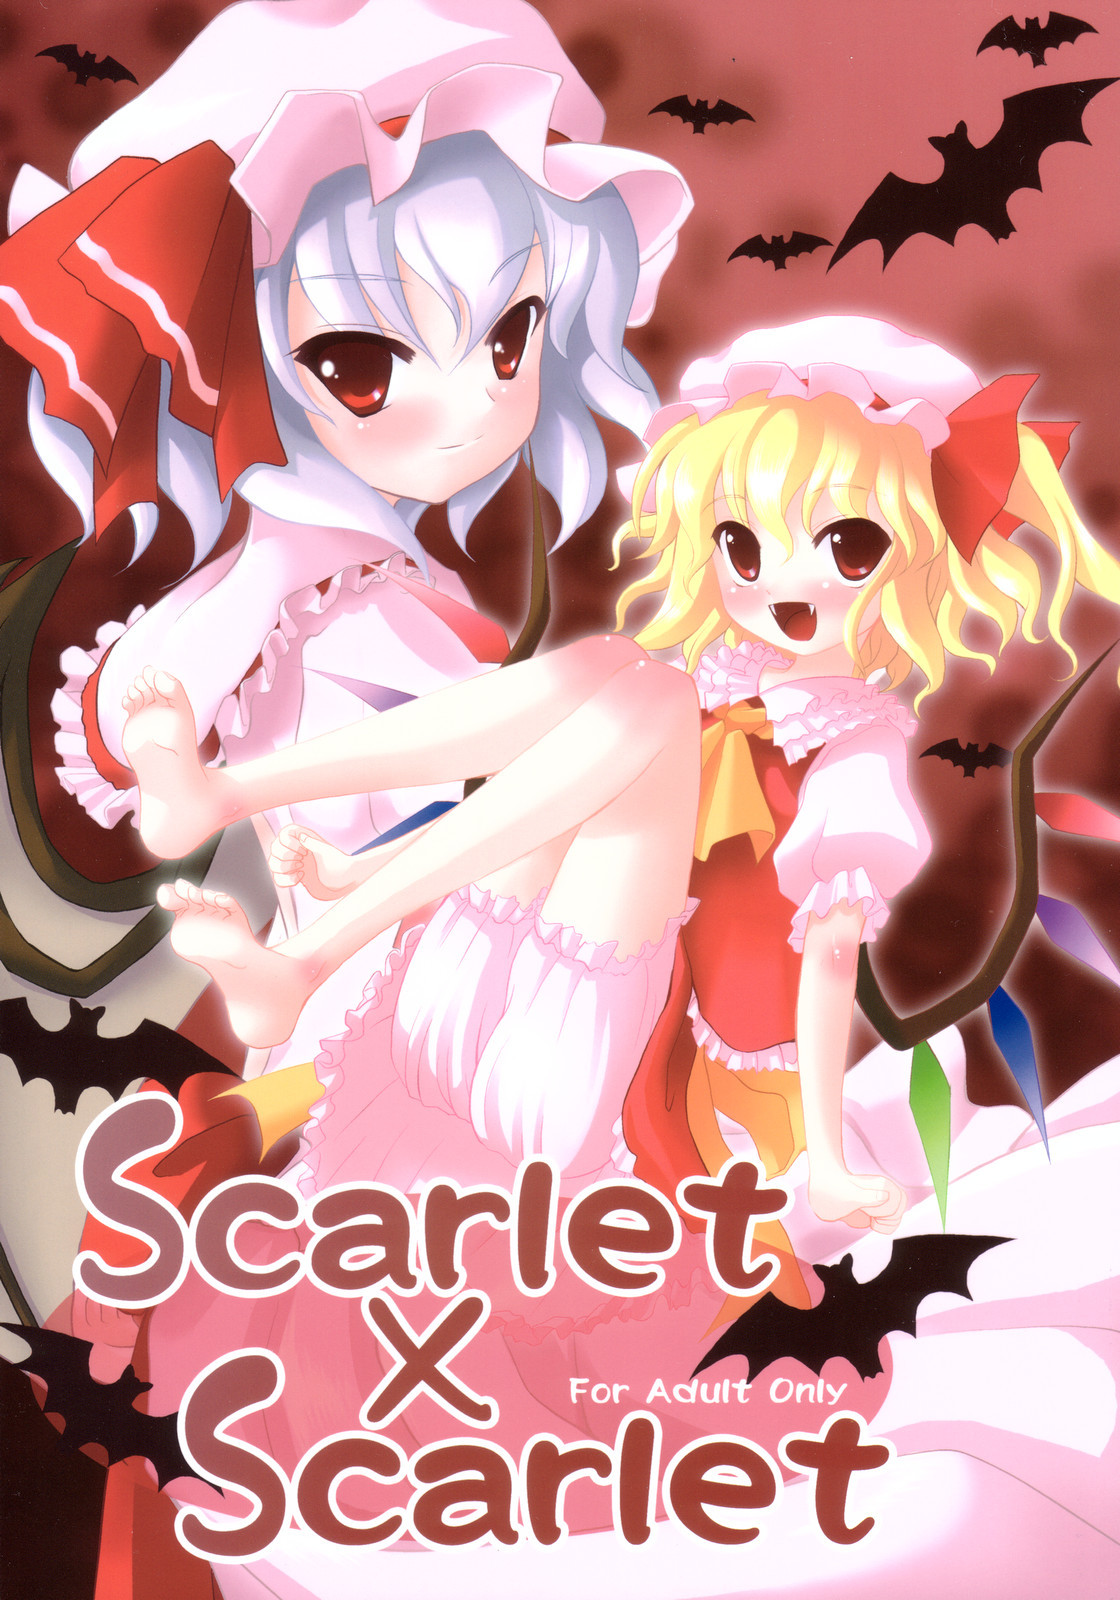 Scarlet x Scarlet touhou project hentai manga